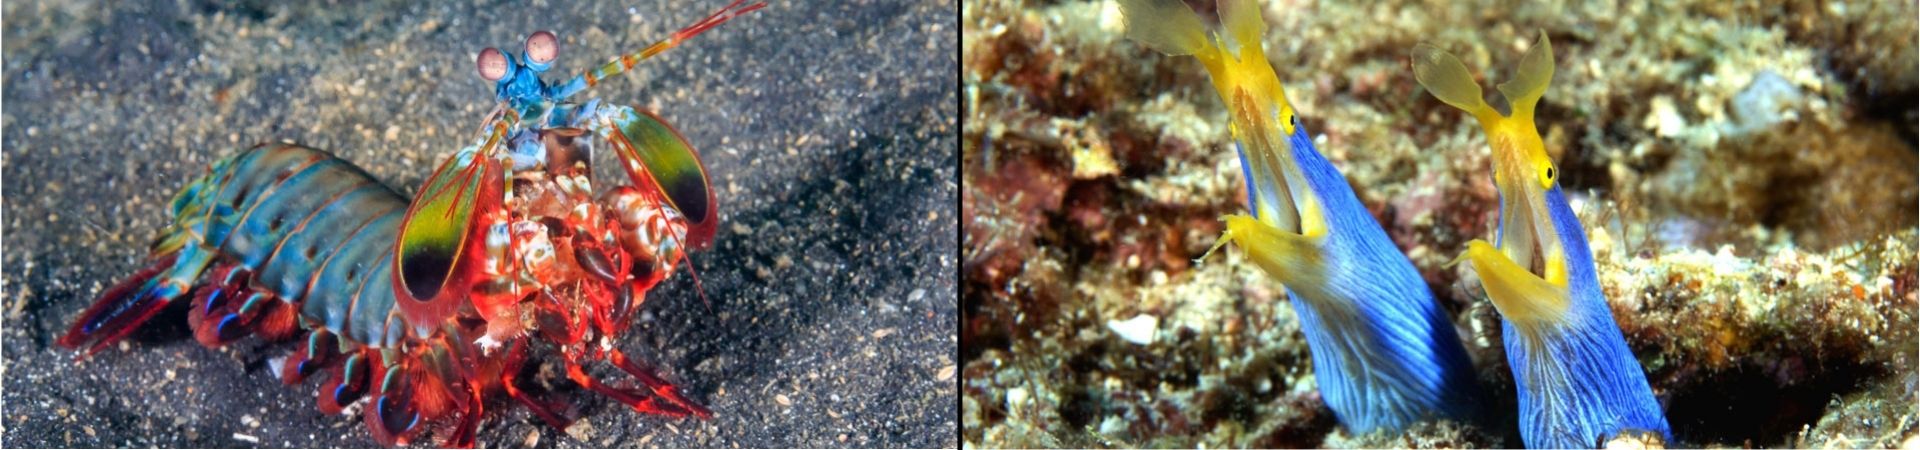 Muck Diving Mantis Shrimp + Juvenile Ribbon Eels